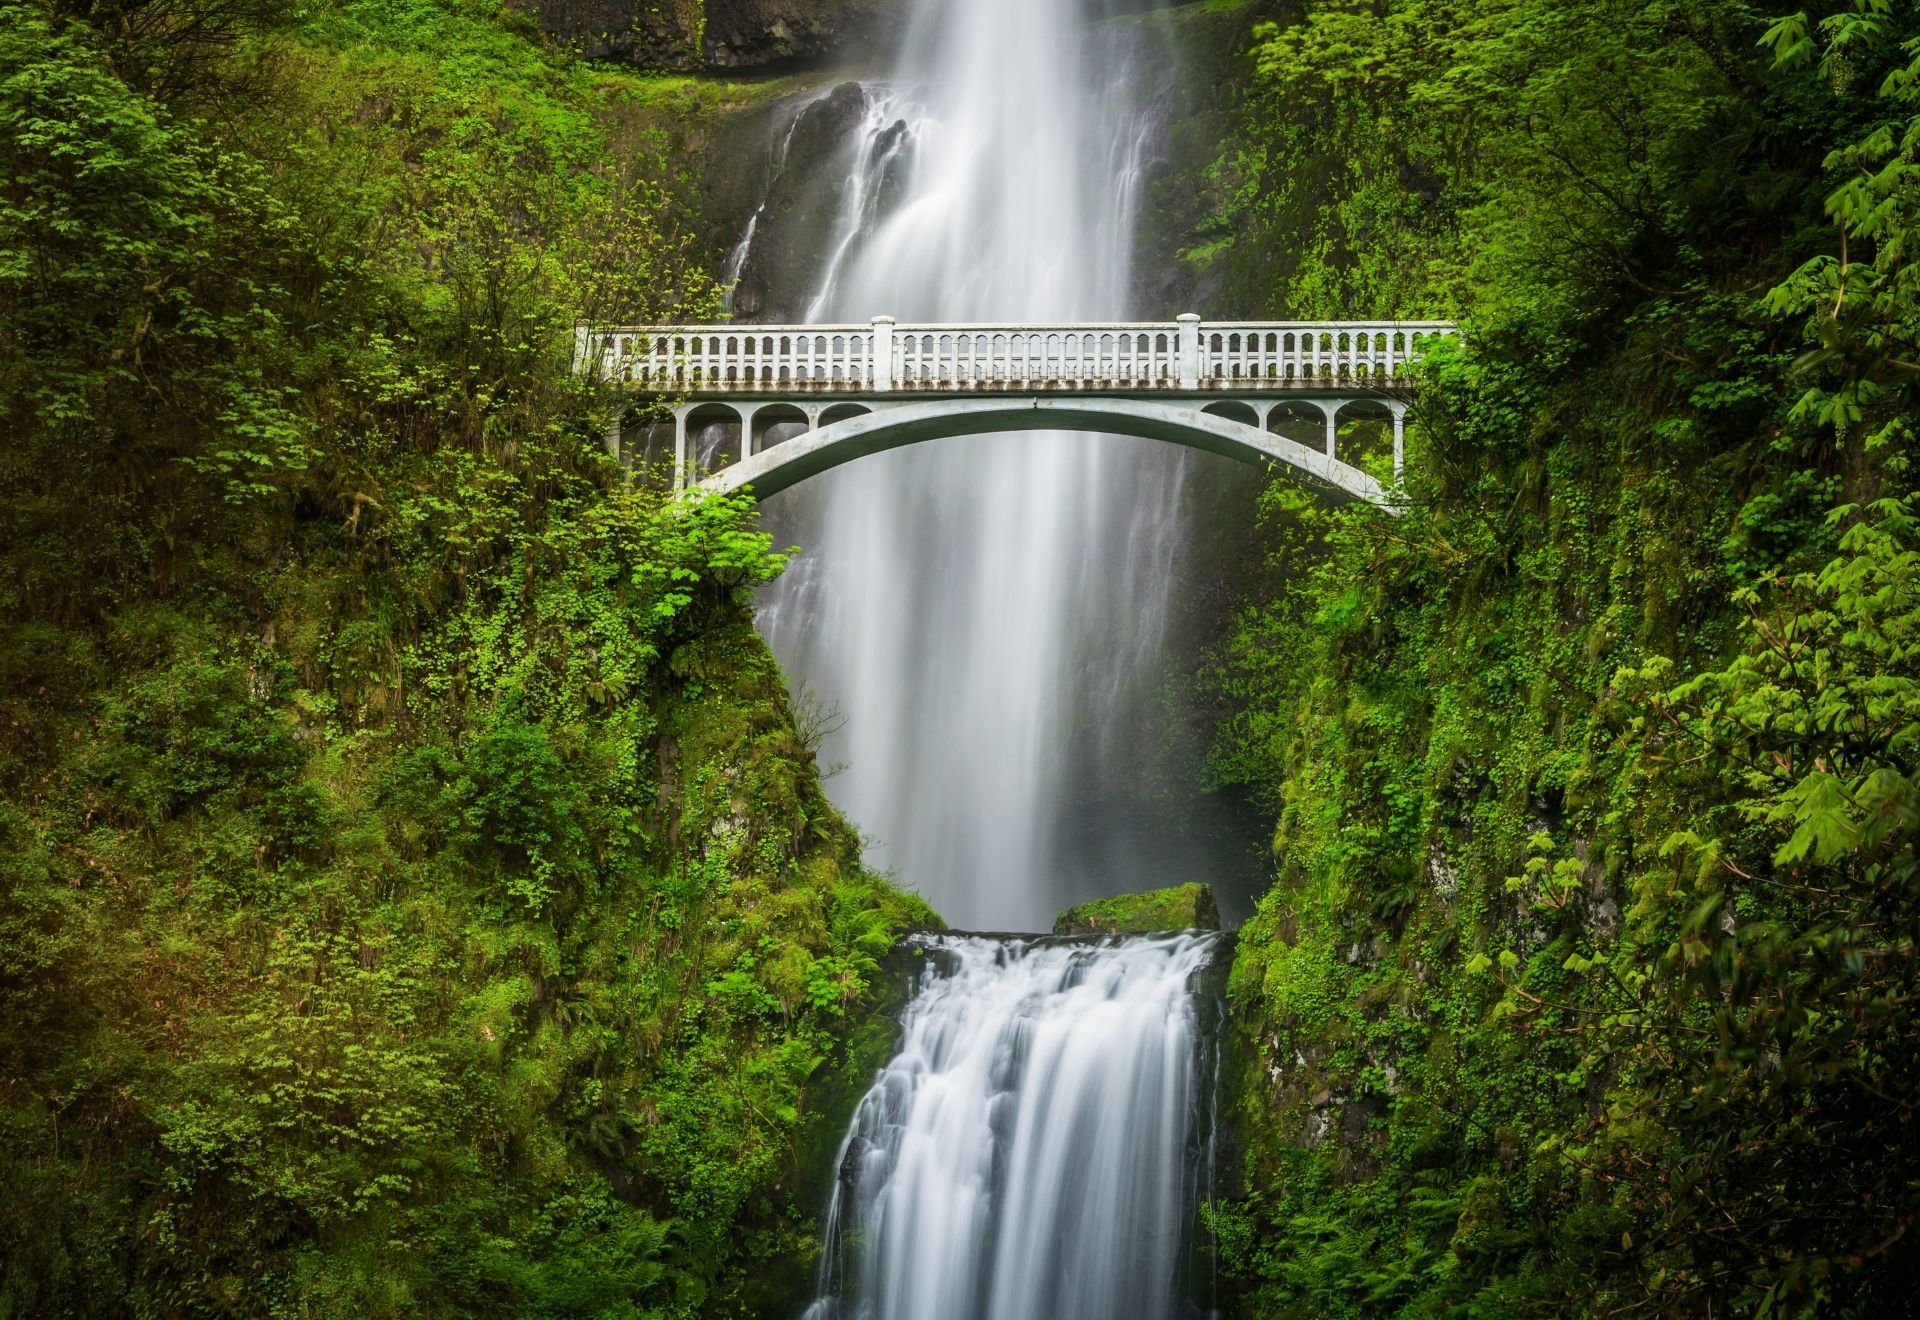 Best Waterfalls in the USA - 15 Breathtaking Waterfalls